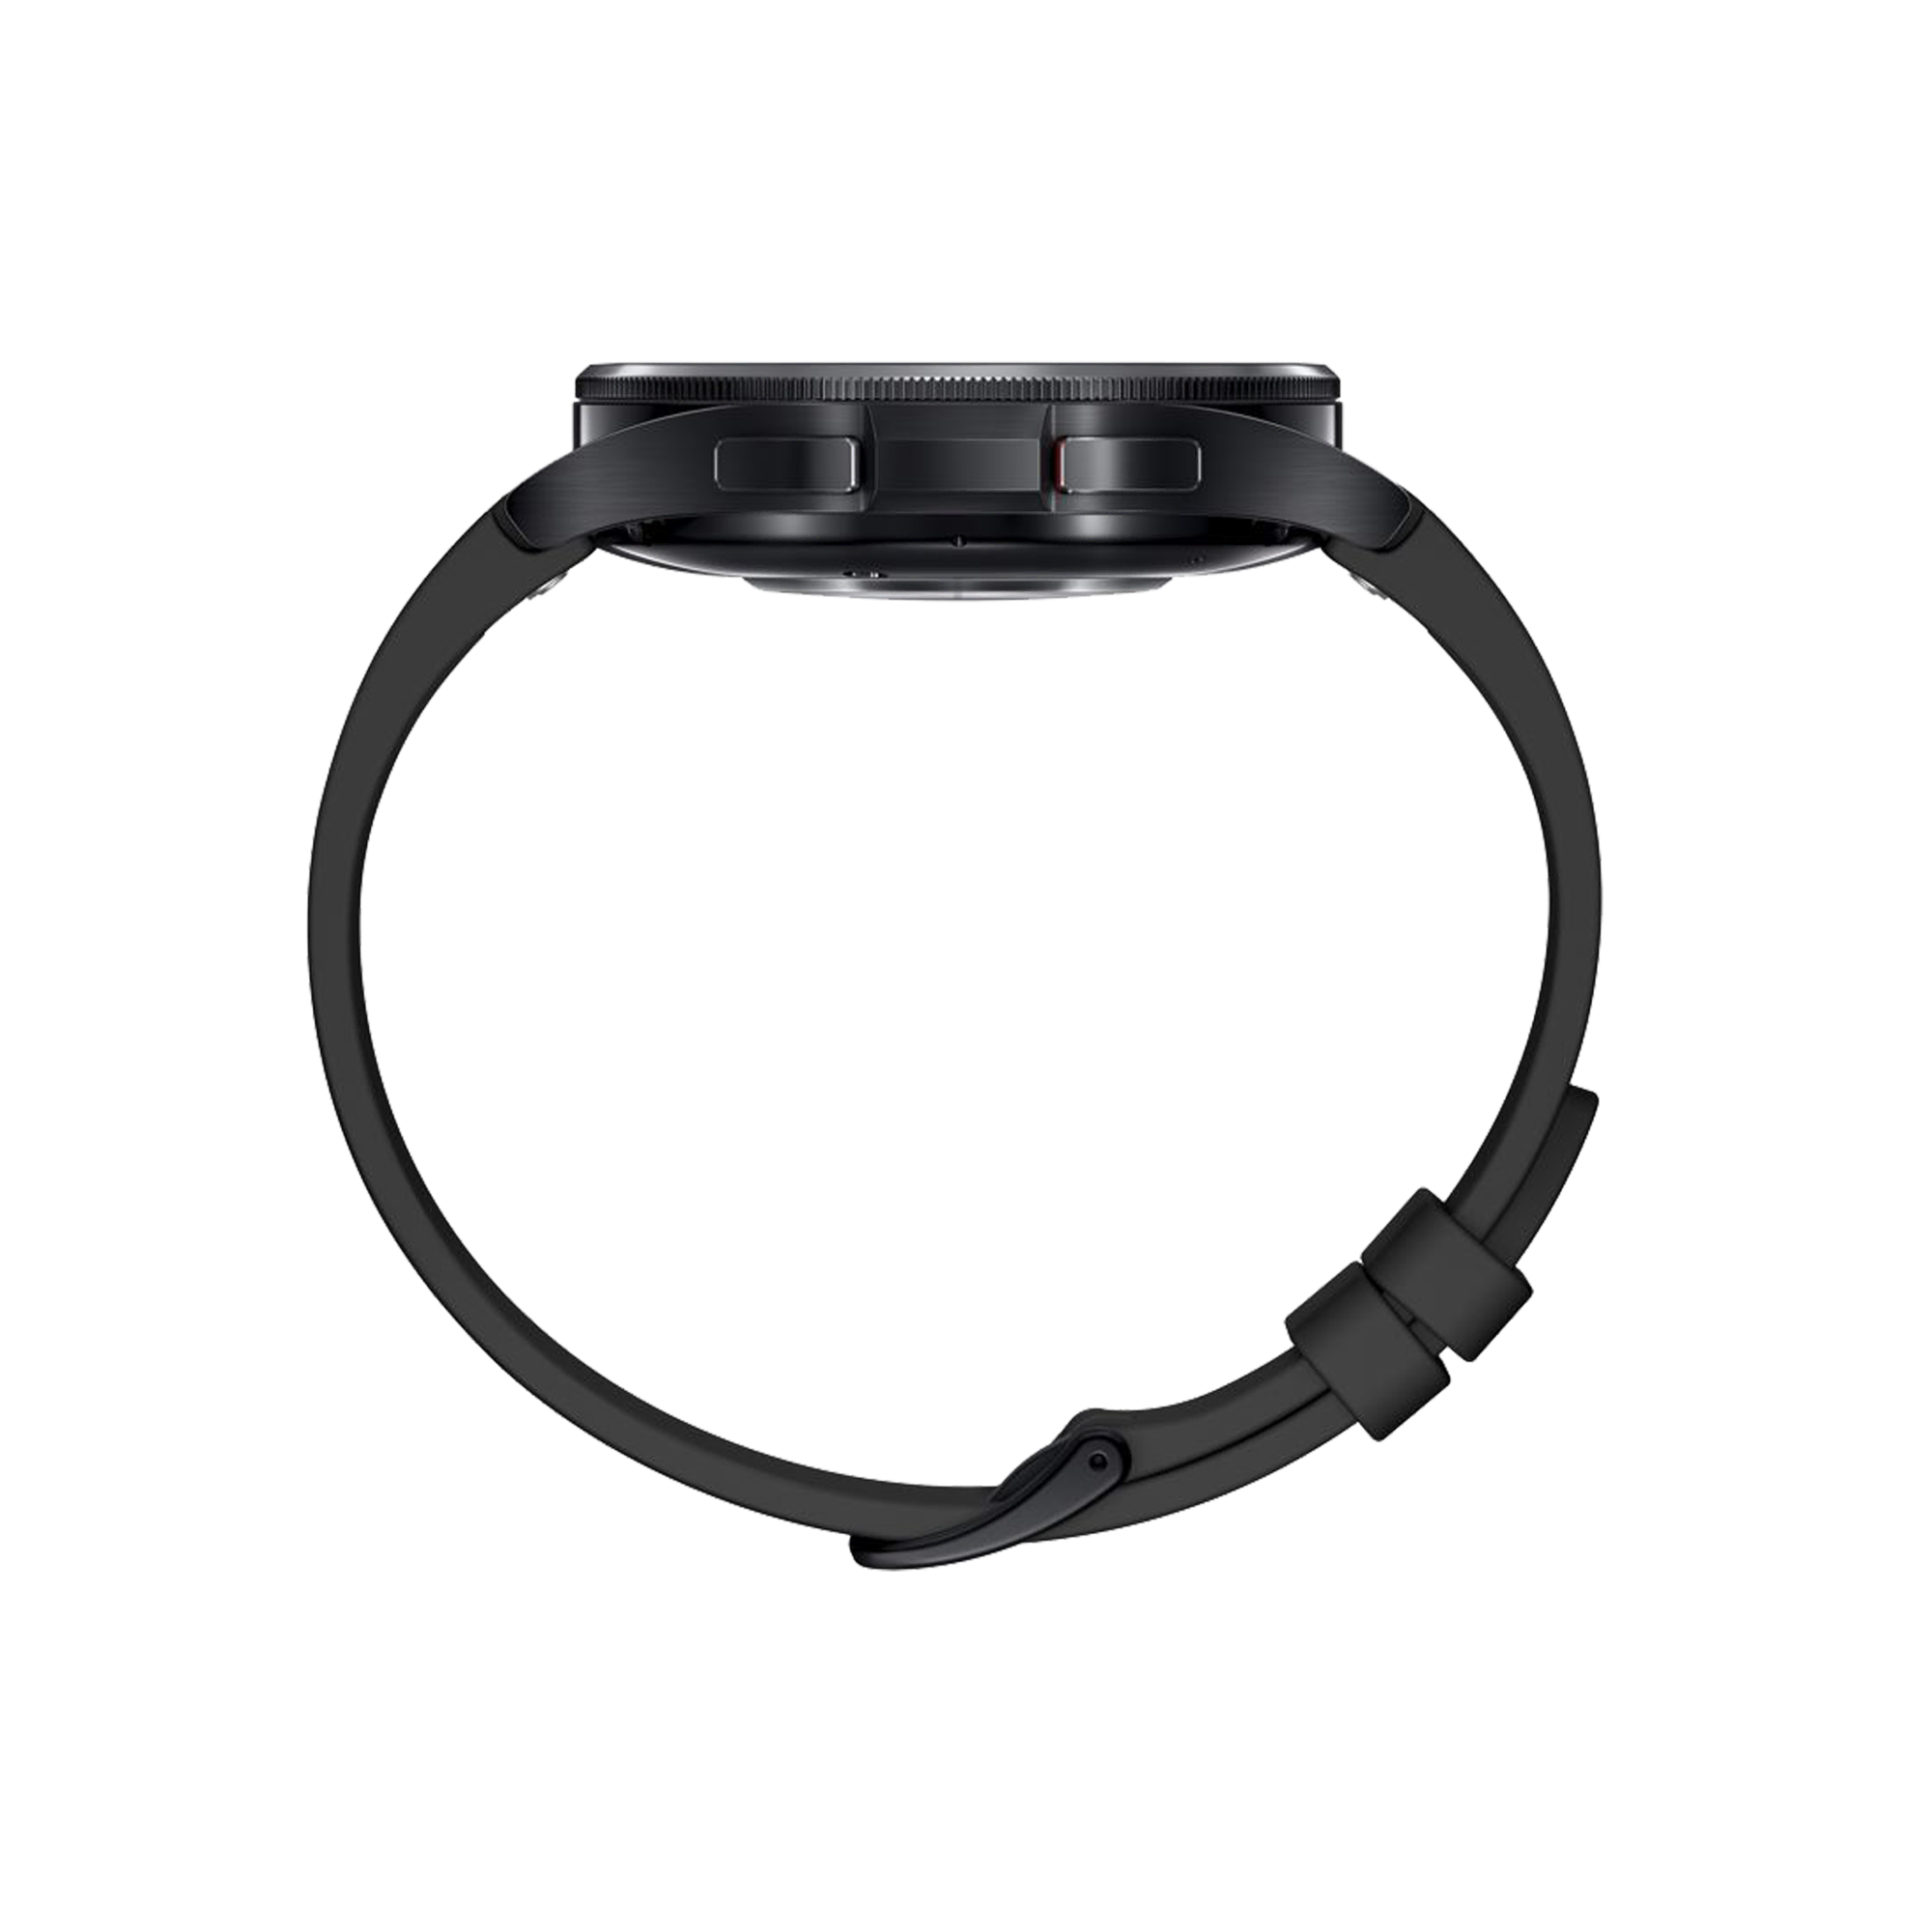 SAMSUNG Watch 6 Classic (47mm) Siyah Akıllı Saat